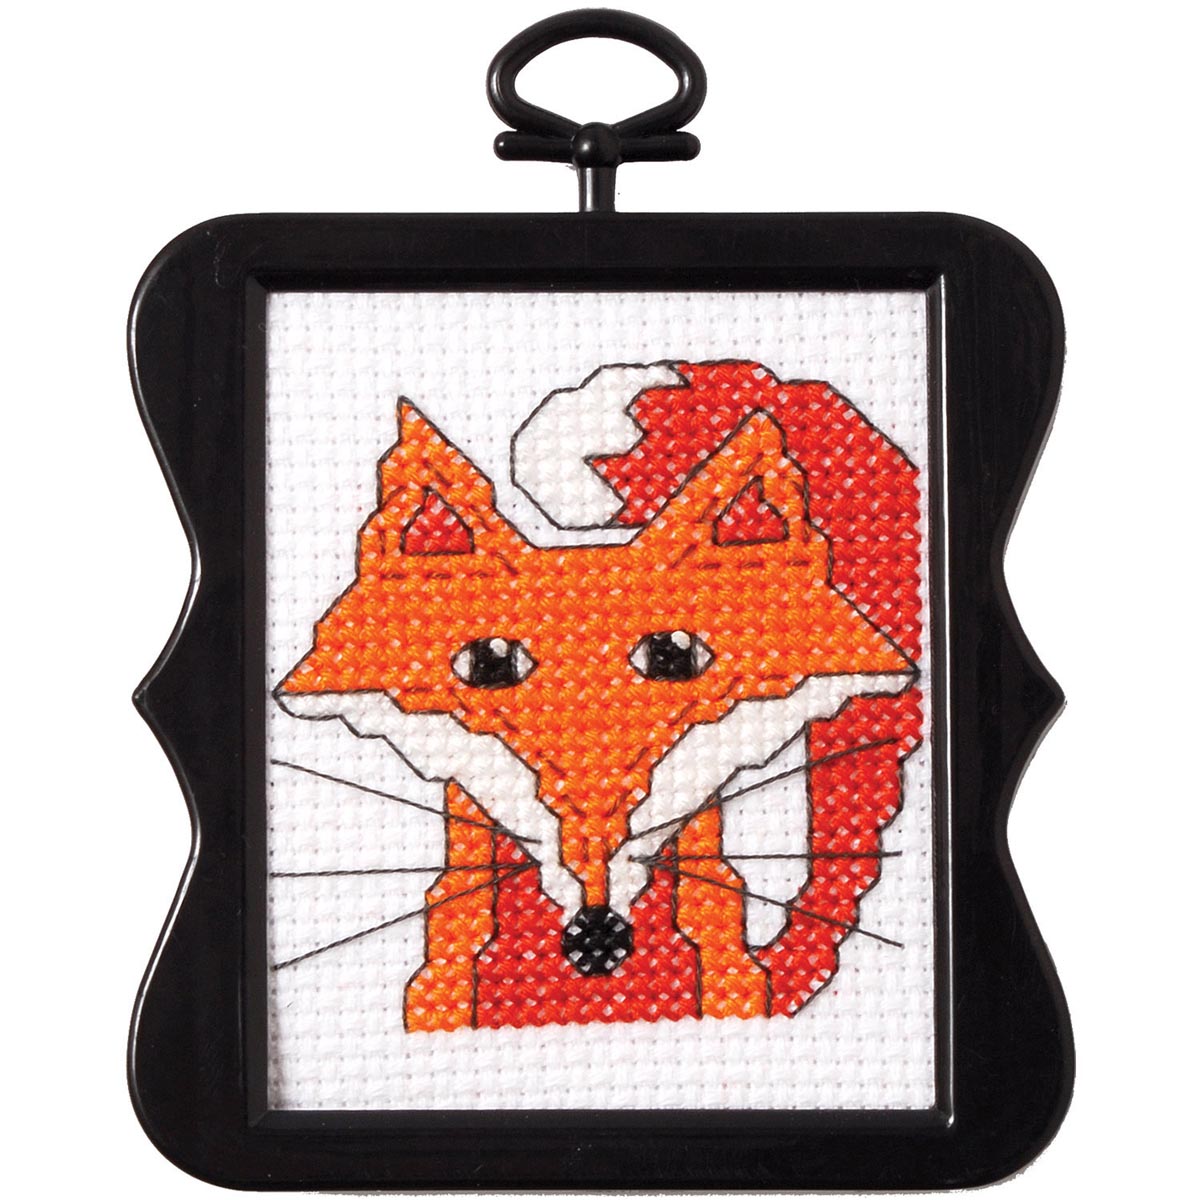 Bucilla ® Counted Cross Stitch - Beginner Stitchery - Mini - Fox - 46151